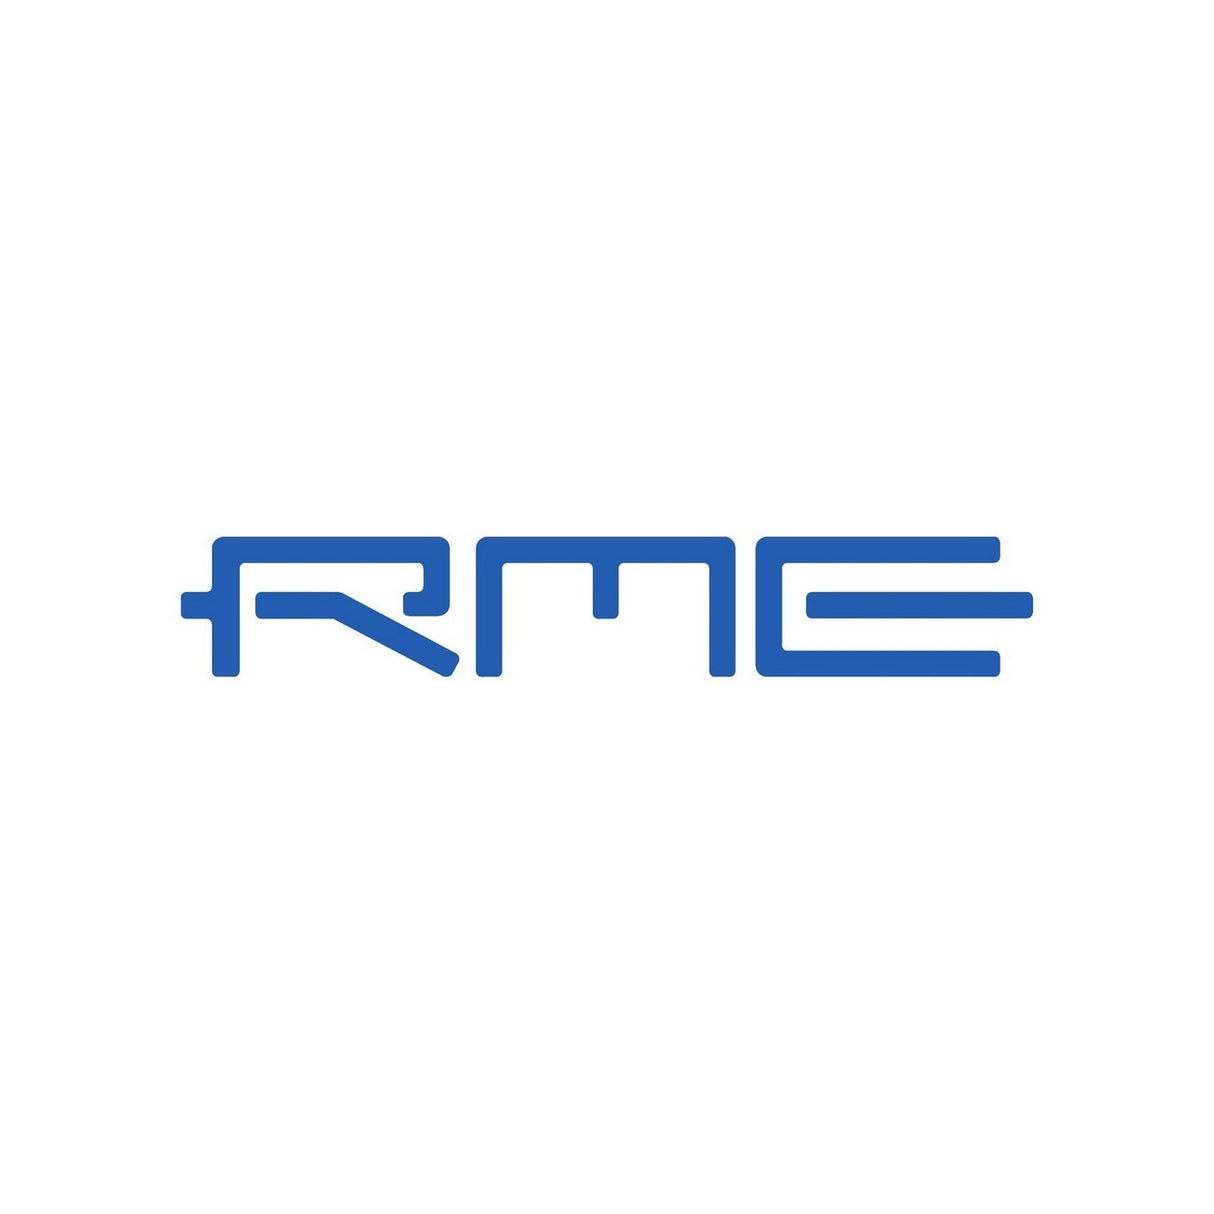 RME RE2 | Replacement Rack Ears 2RU Packed in Pairs